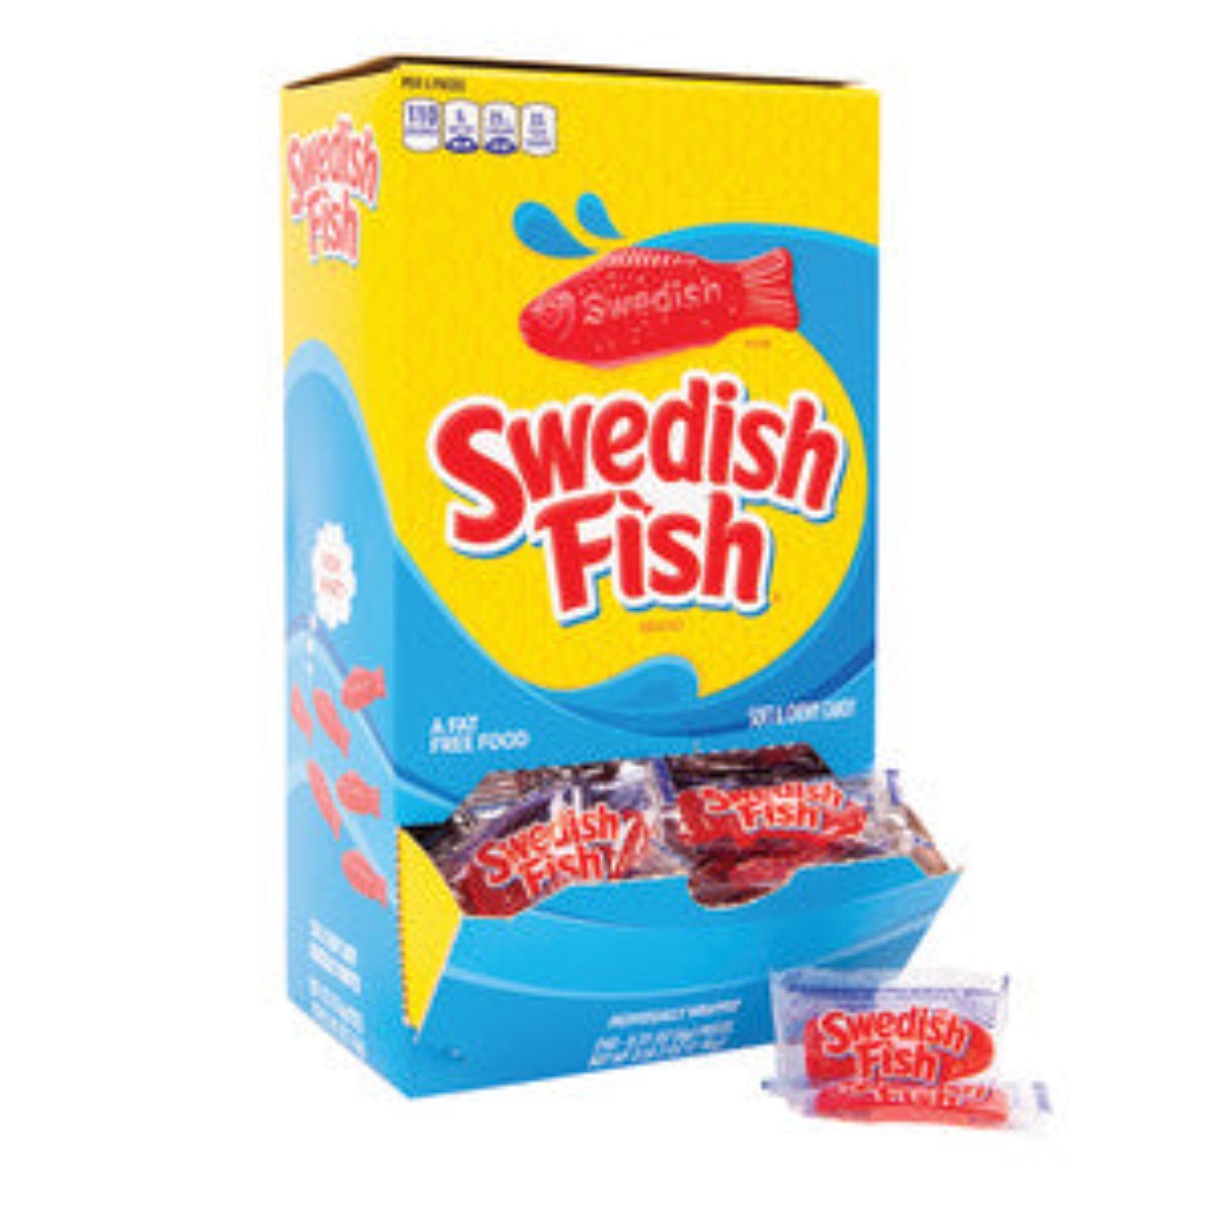 Gummi Red Swedish Fish Wrapped 0.21oz - 240ct